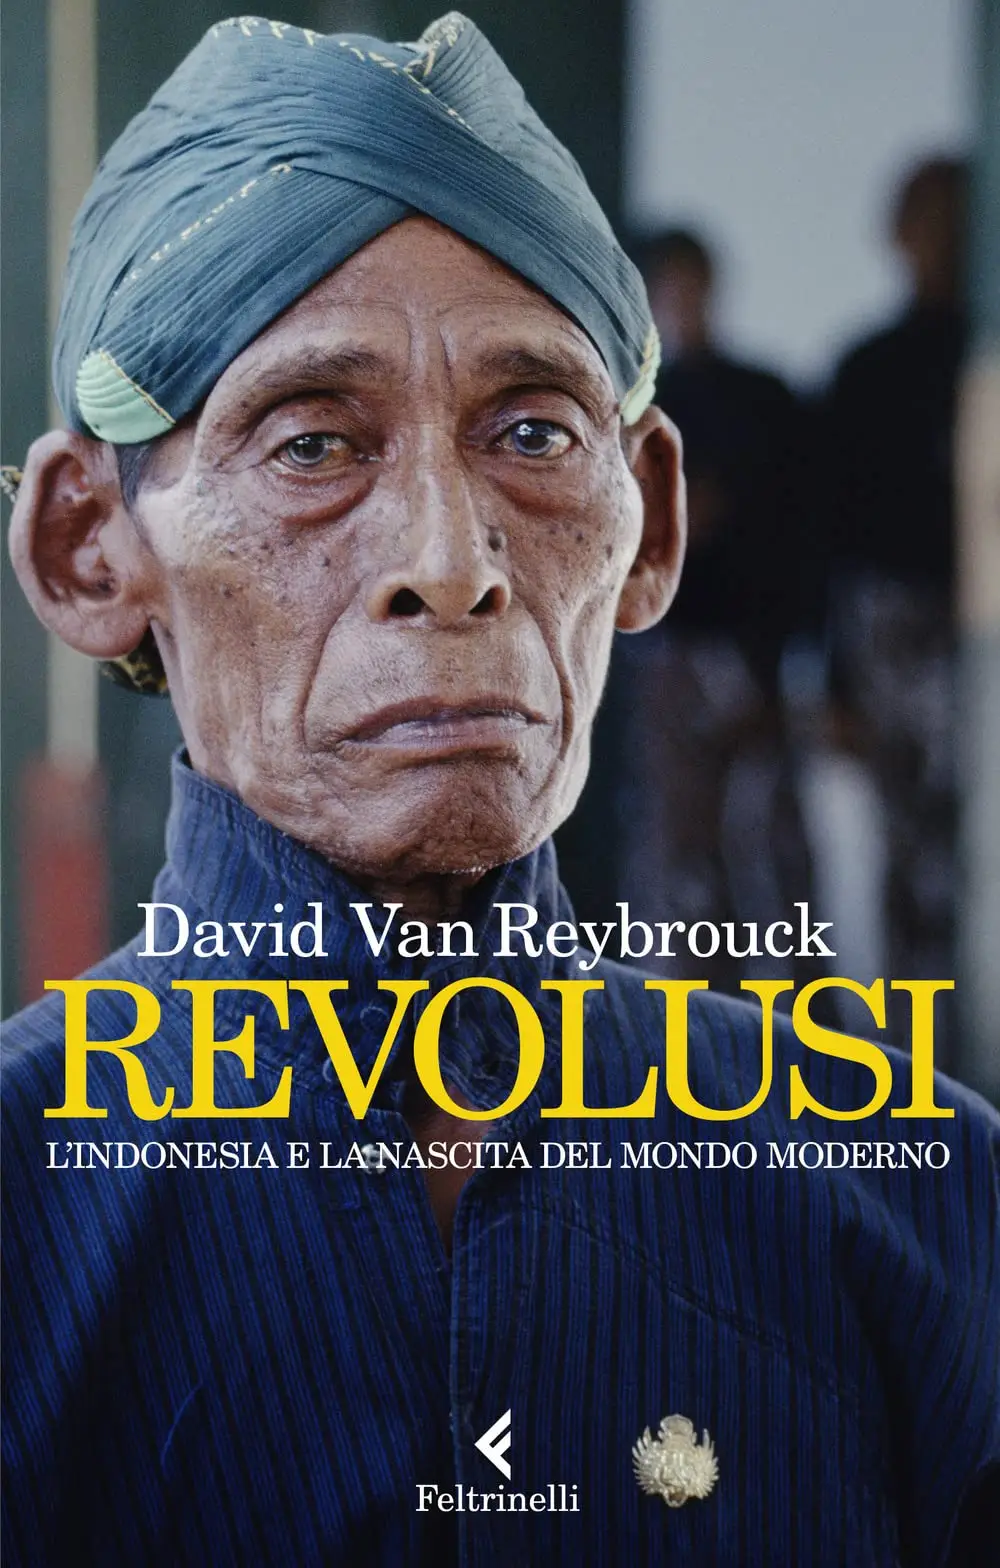 David Van Reybrouck Revolusi Lindonesia E La Nascita Del Mondo Moderno Avaxhome 3728